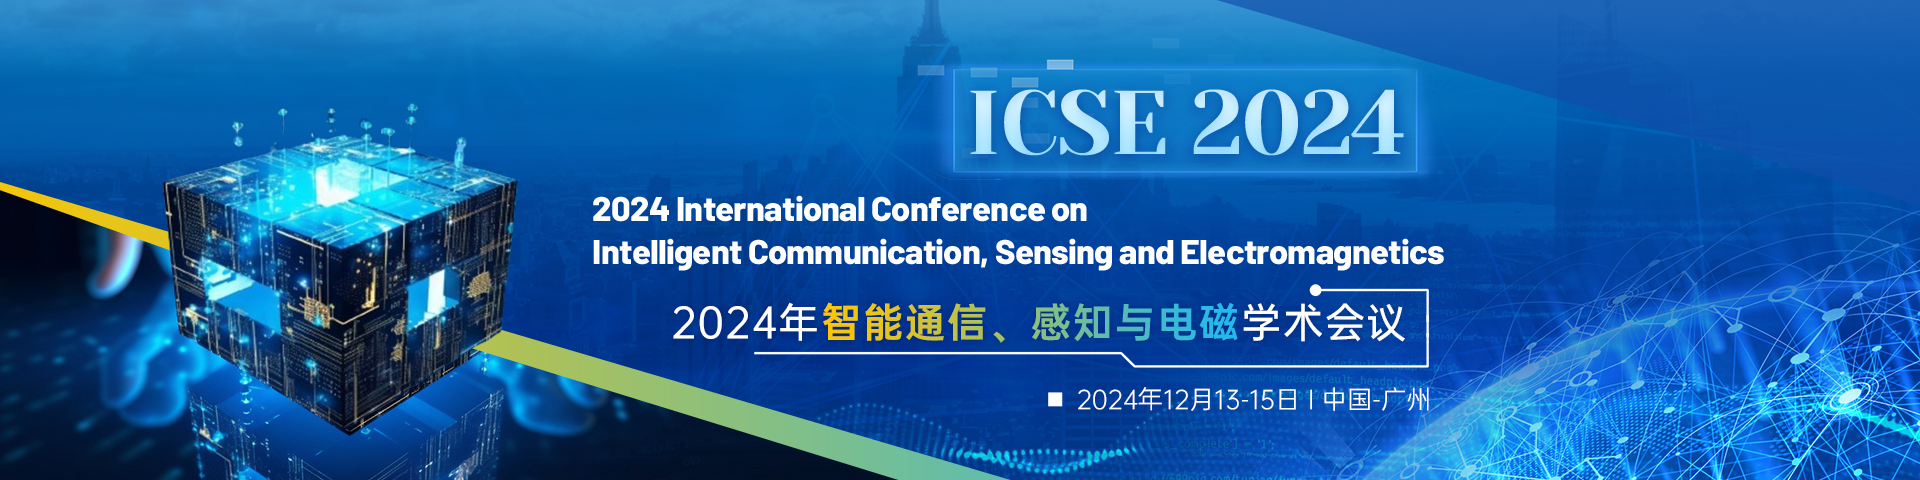 ICSE 2024-会议官网轮播图（中文）.png